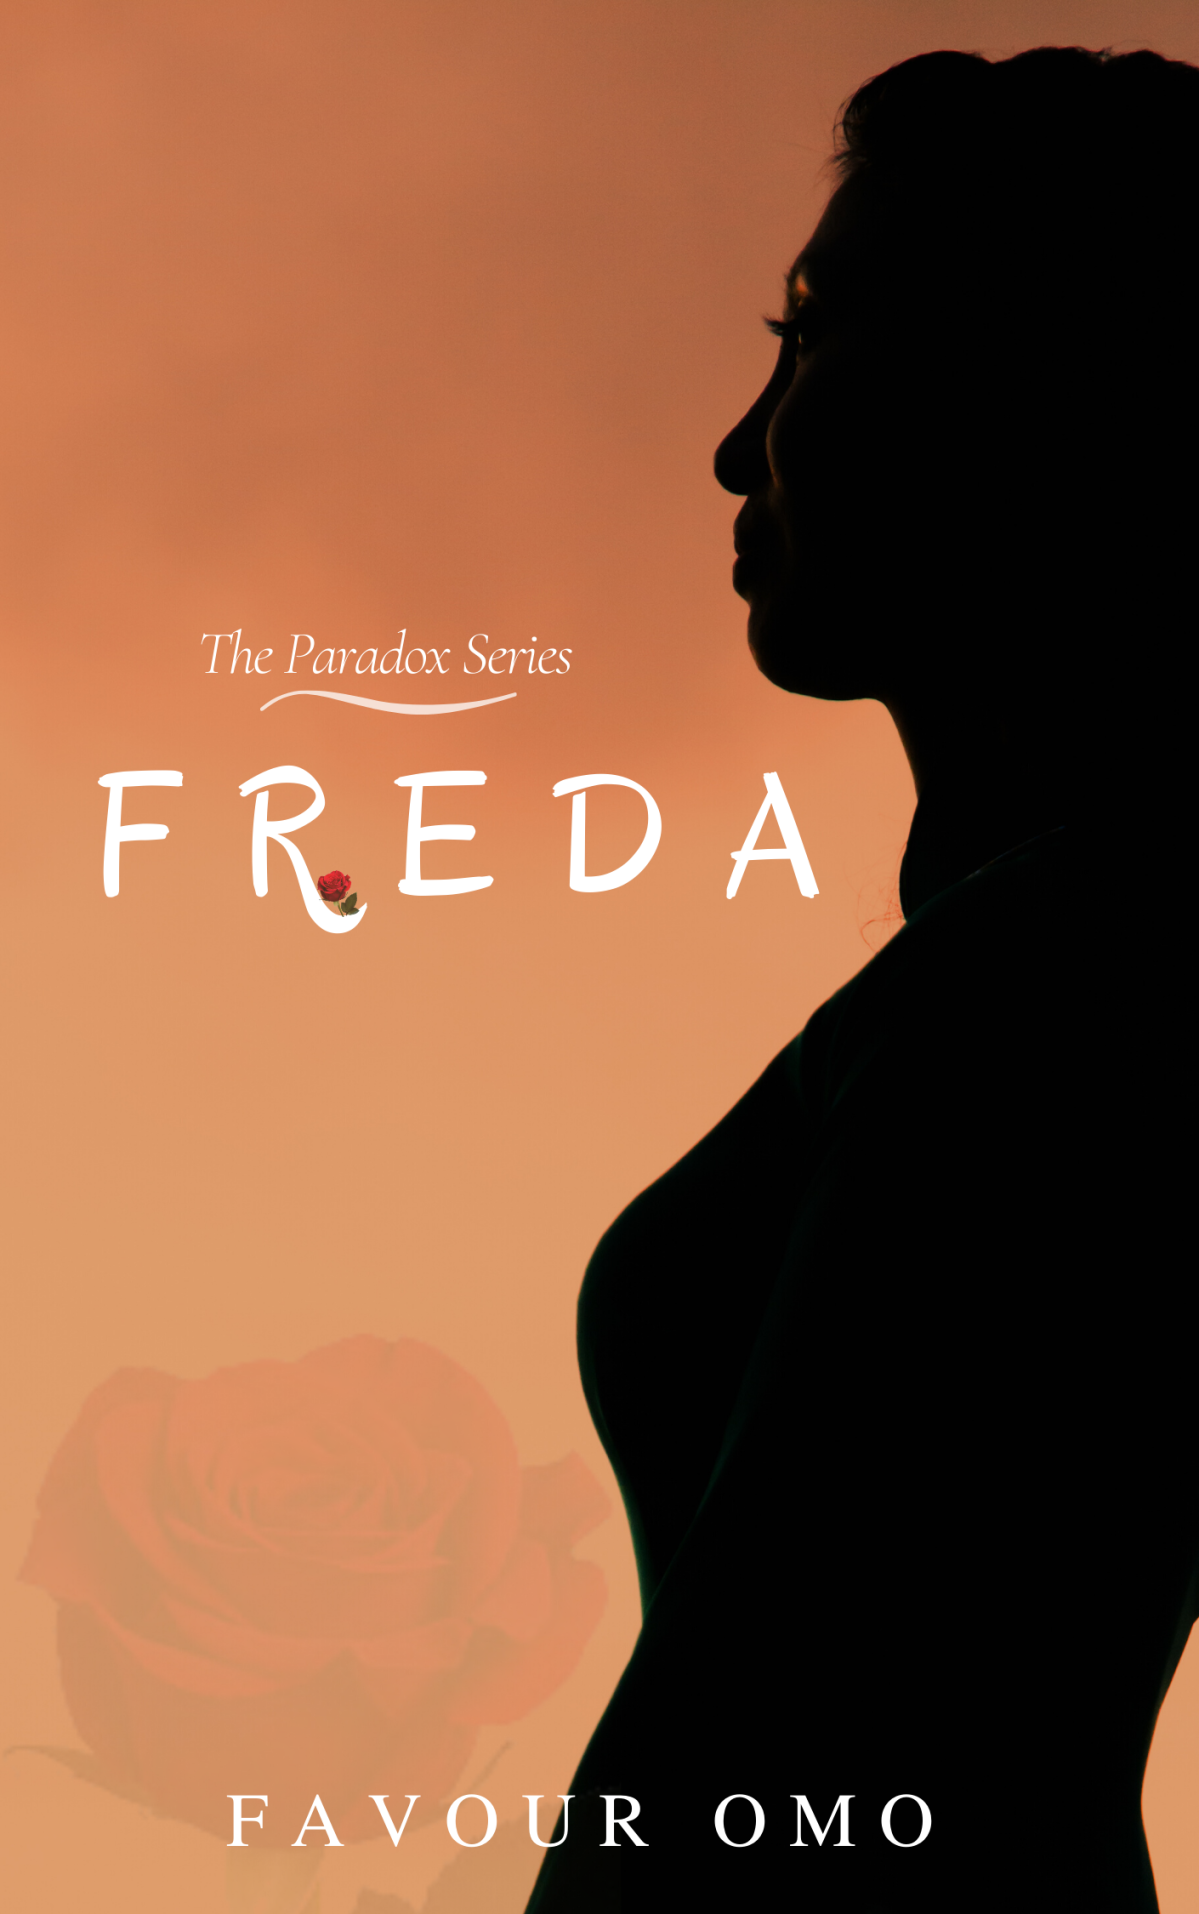 FREDA IS FINALLY HERE